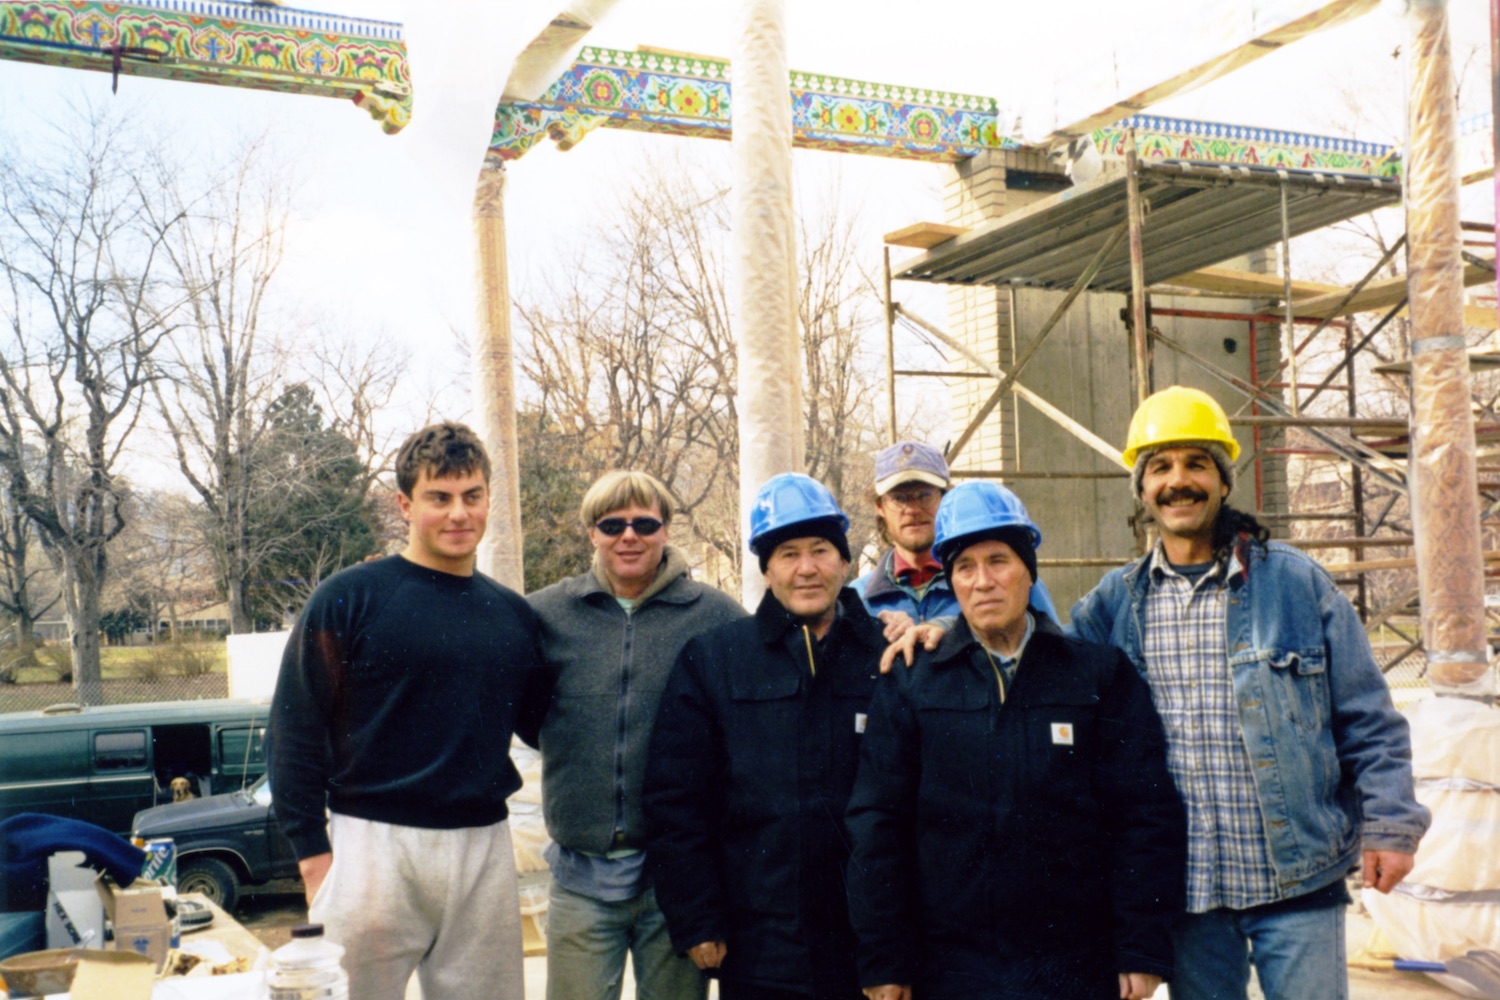 Tajik craftsmen at the Boulder Teahouse construction site. Image courtesy of Rett Ertle